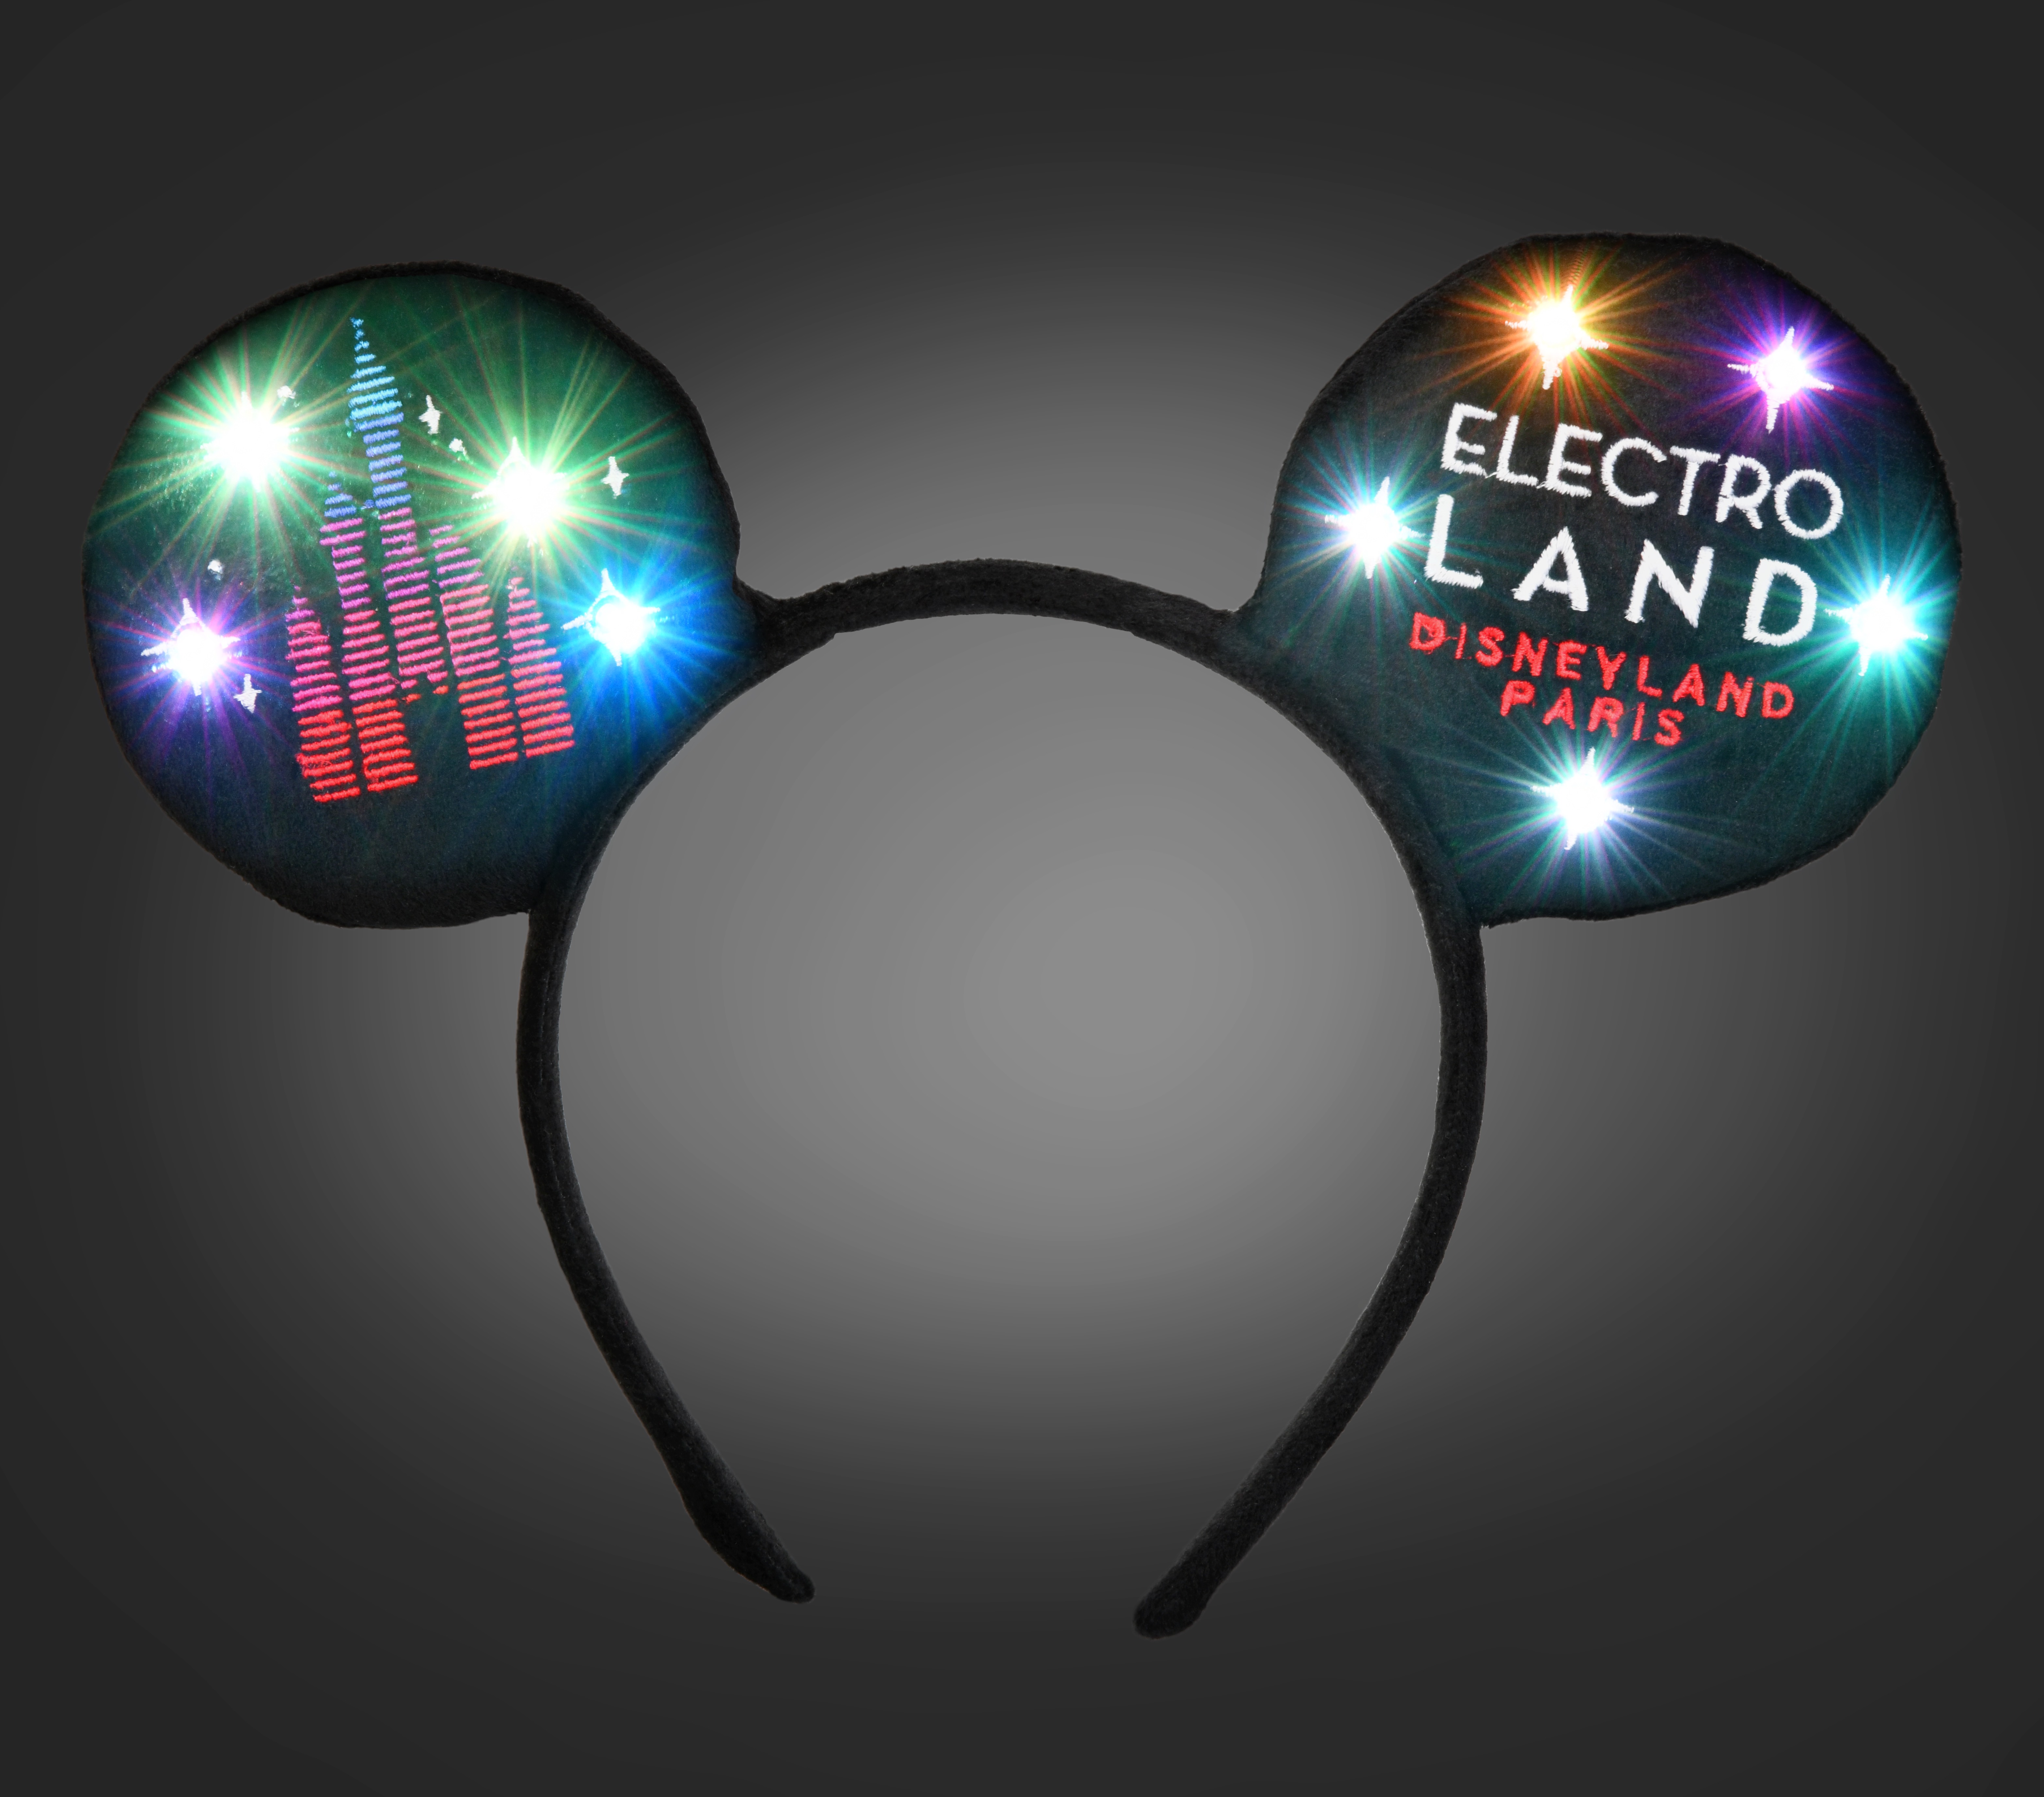 Disneyland Paris’ Electroland Merchandise and Programme Released!